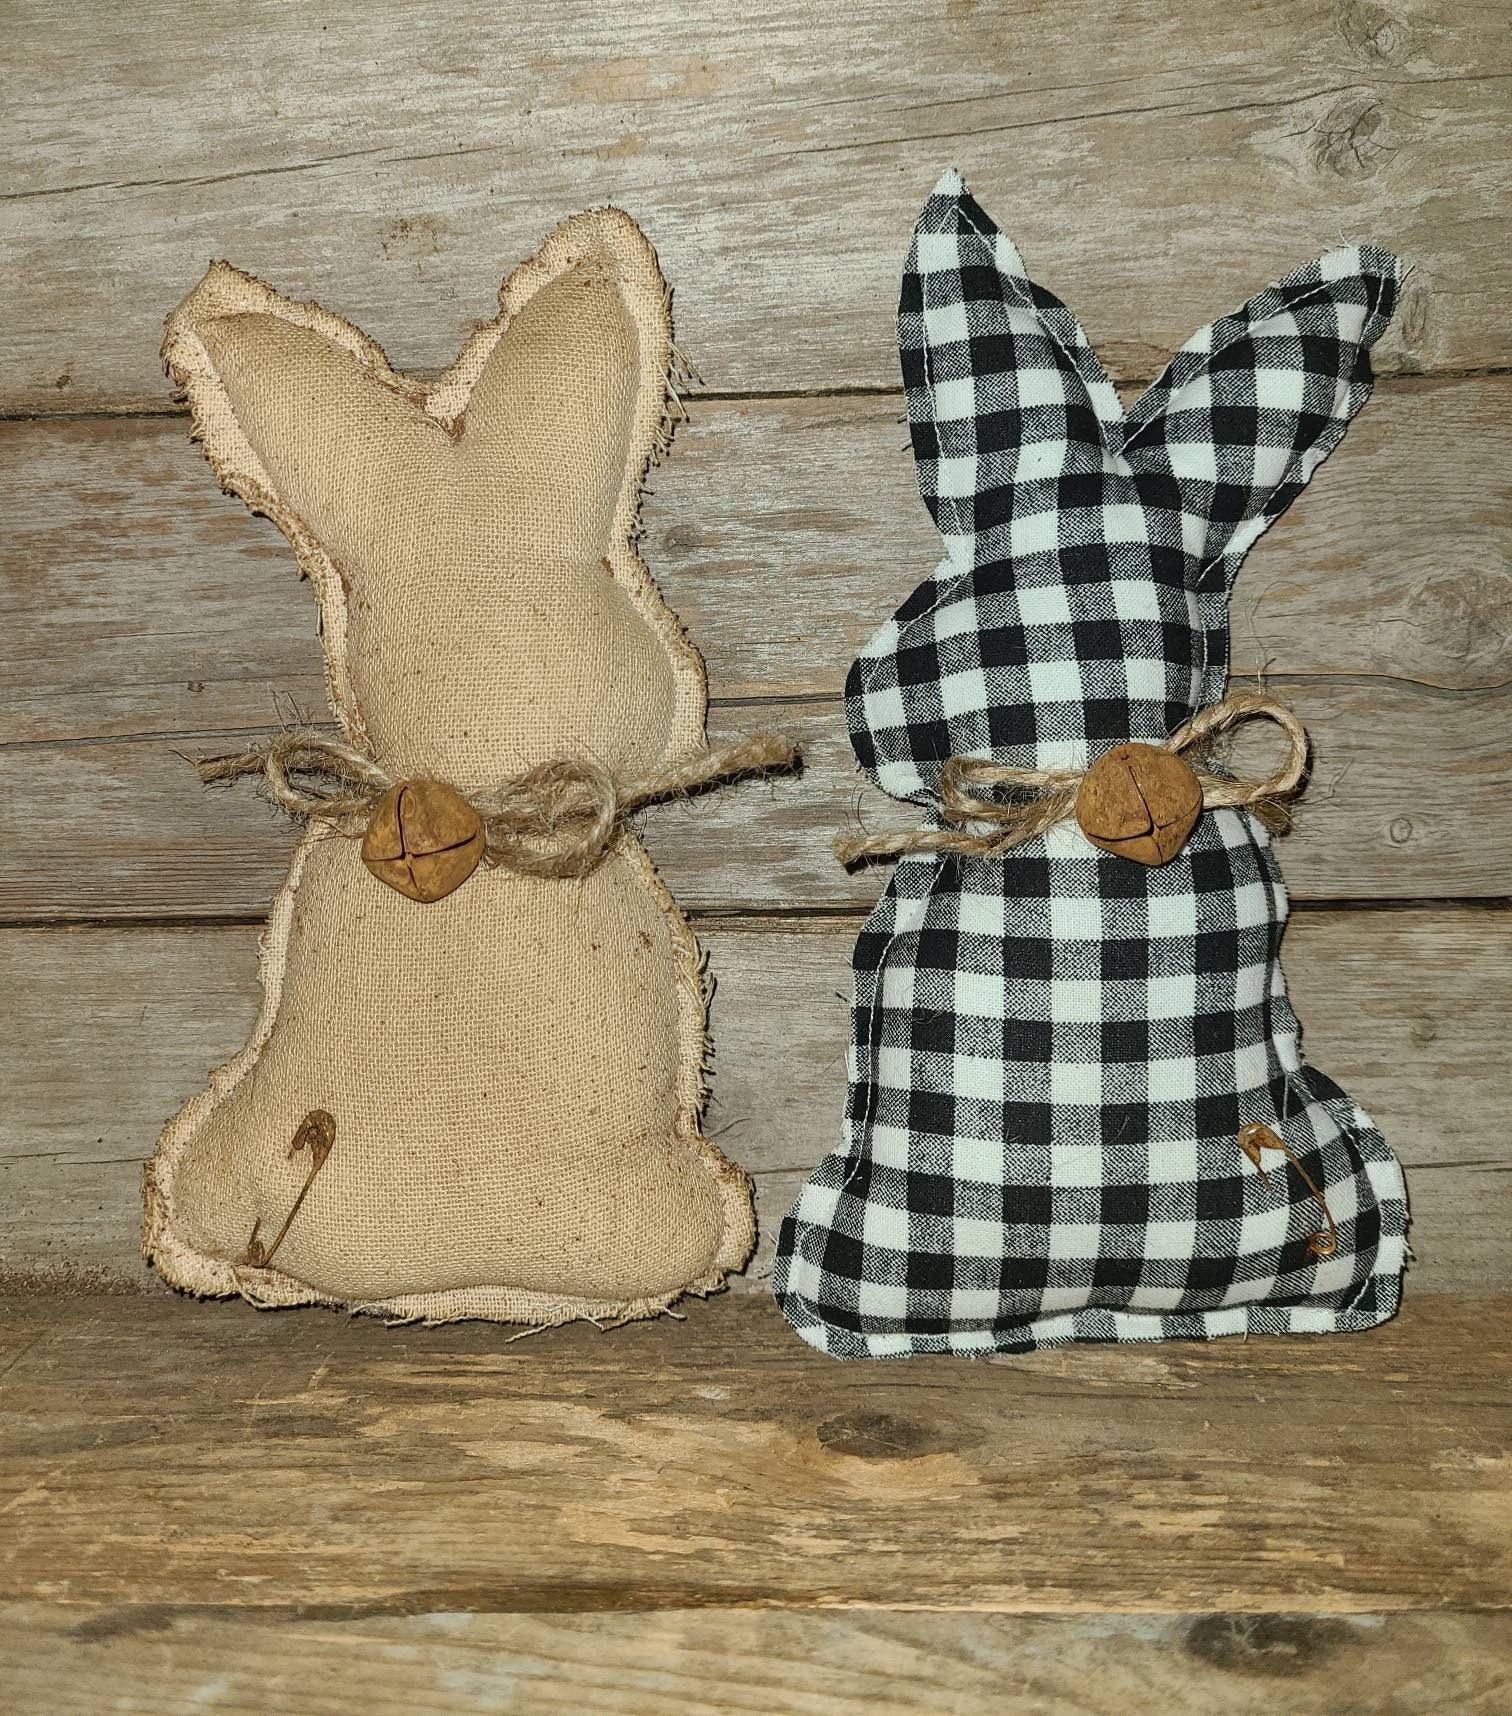 Choice of 1 Primitive Farmhouse Grungy Easter Bunny Rabbit | Etsy